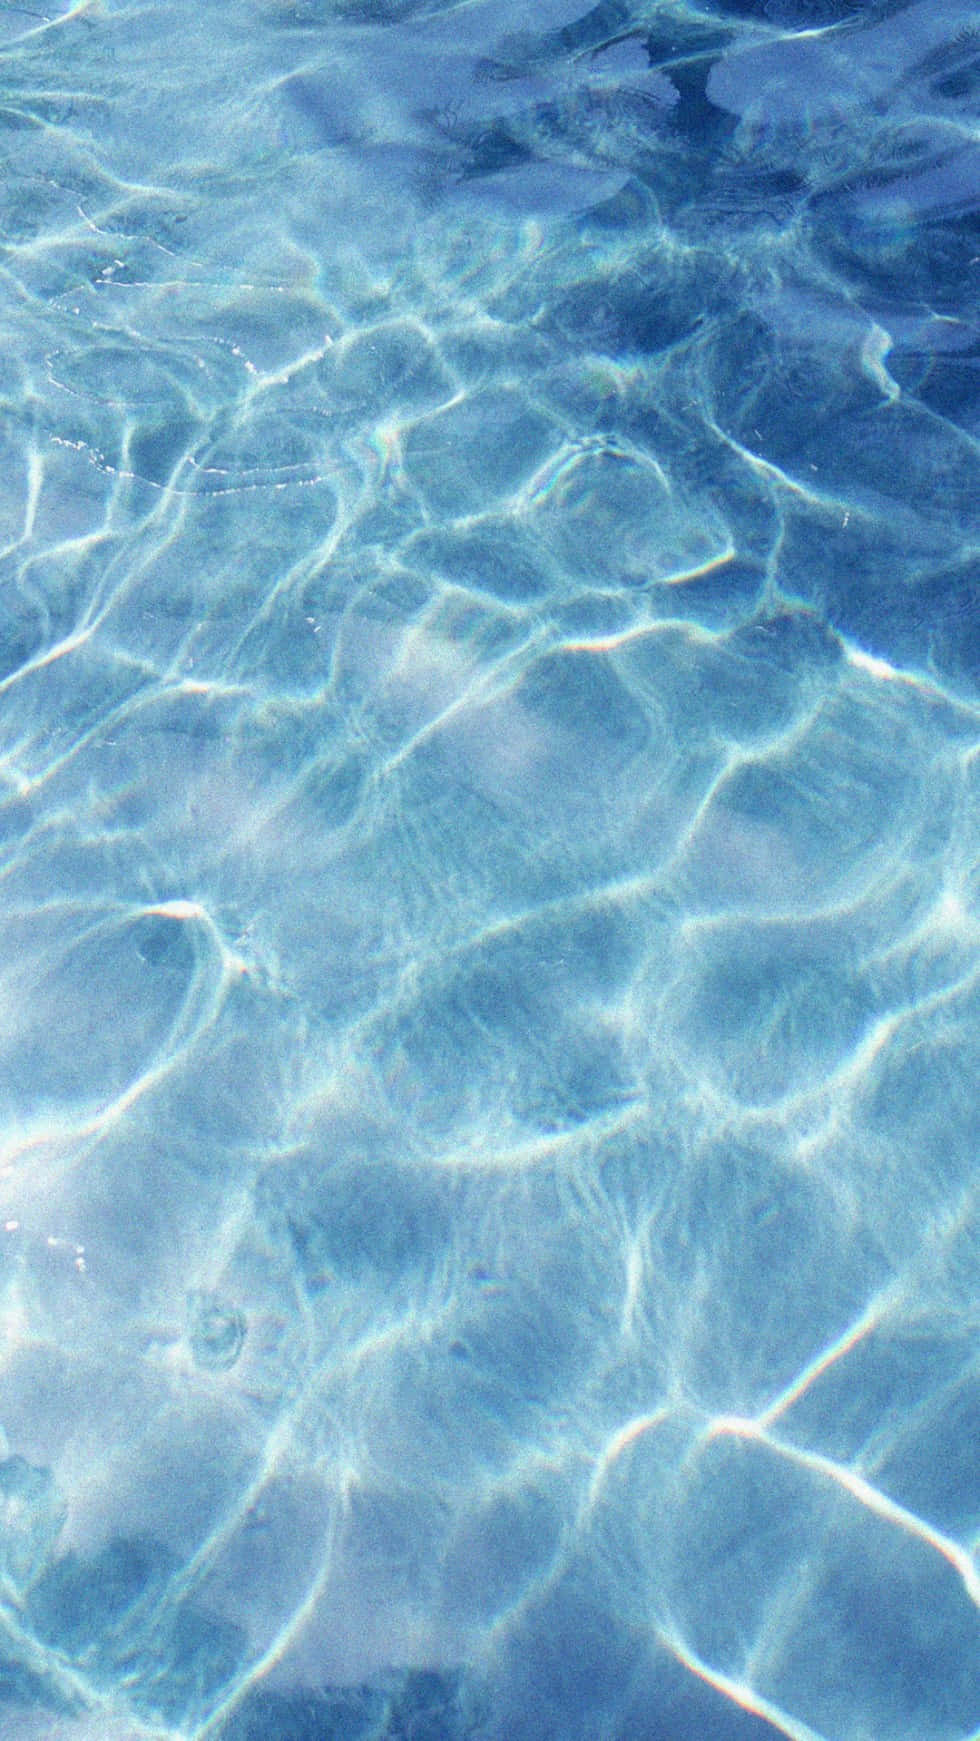 Aesthetic Blue Underwater pictures